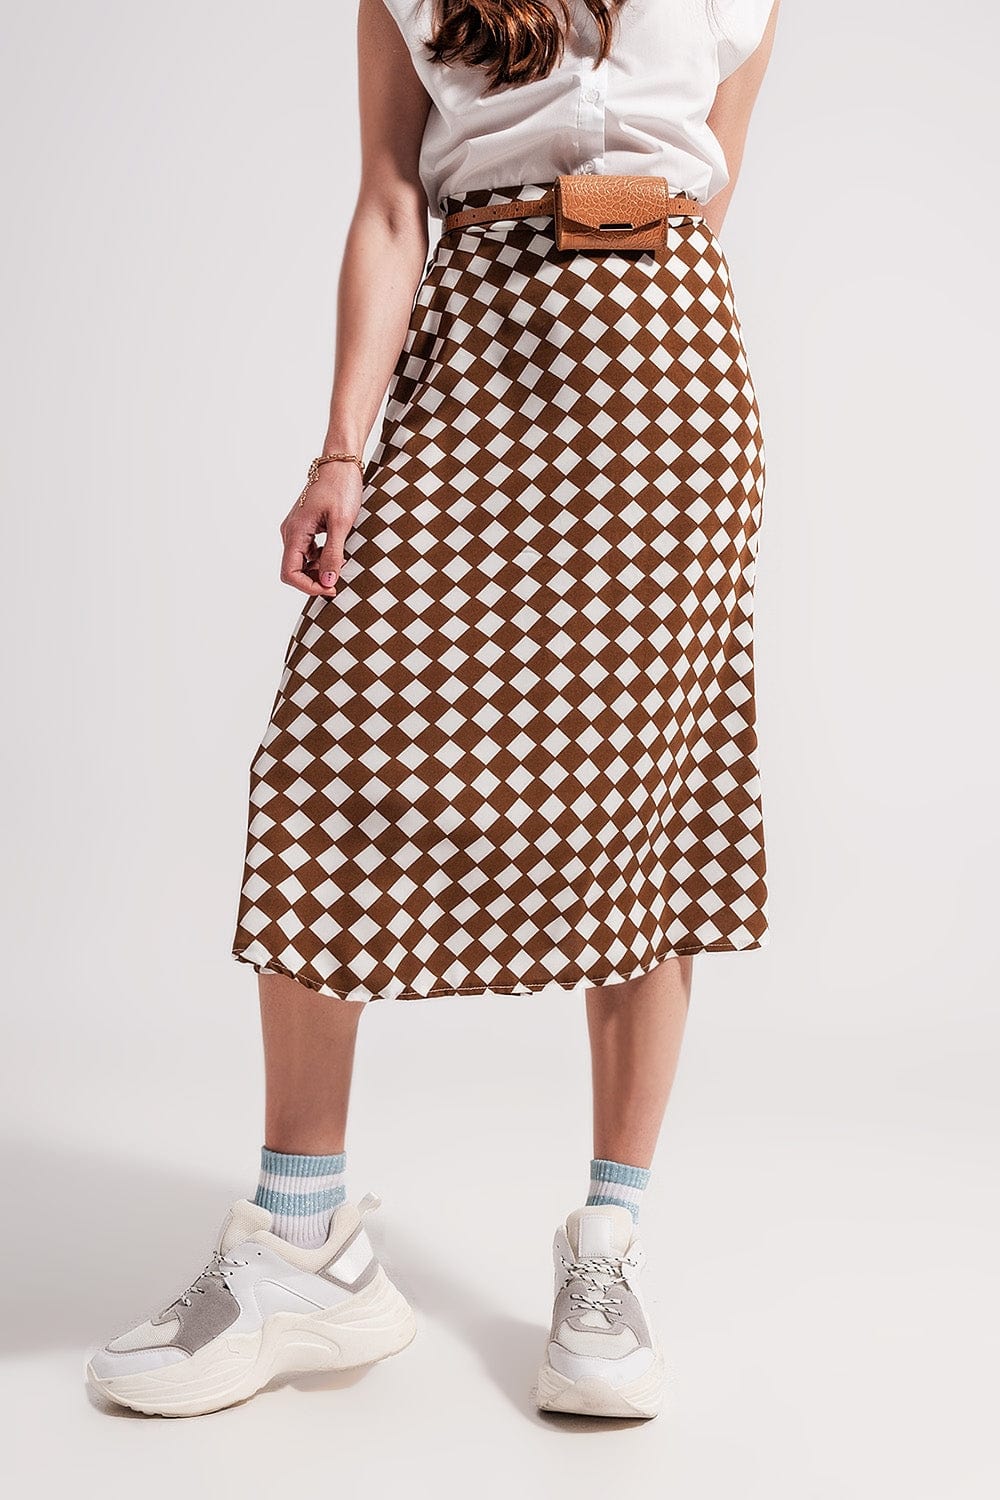 Q2 Women's Skirt Brown Checkerboard Midi Skirt